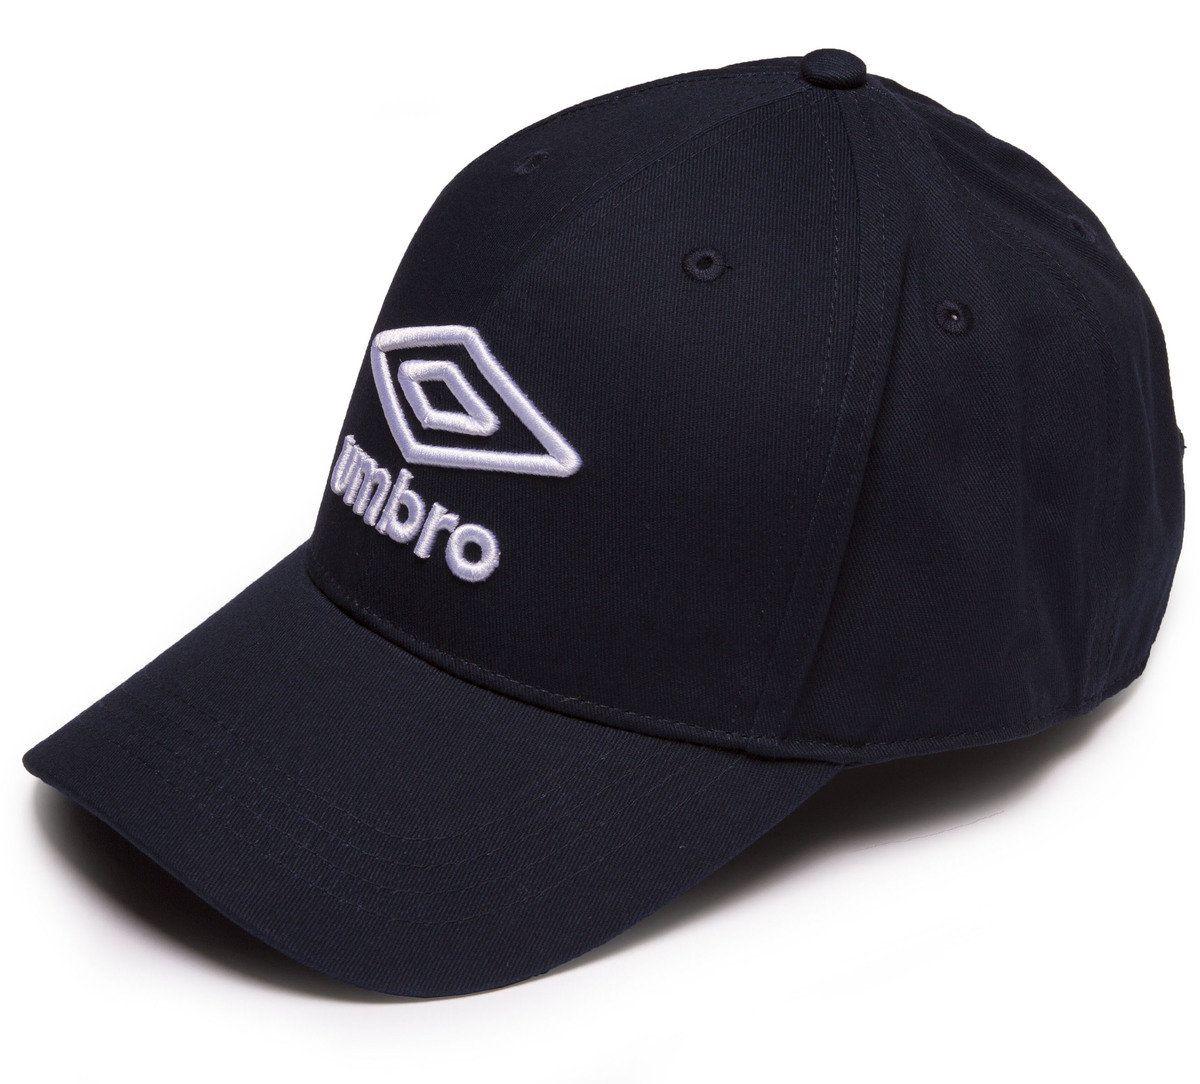 Peru Umbro Logo - LOGO CAP